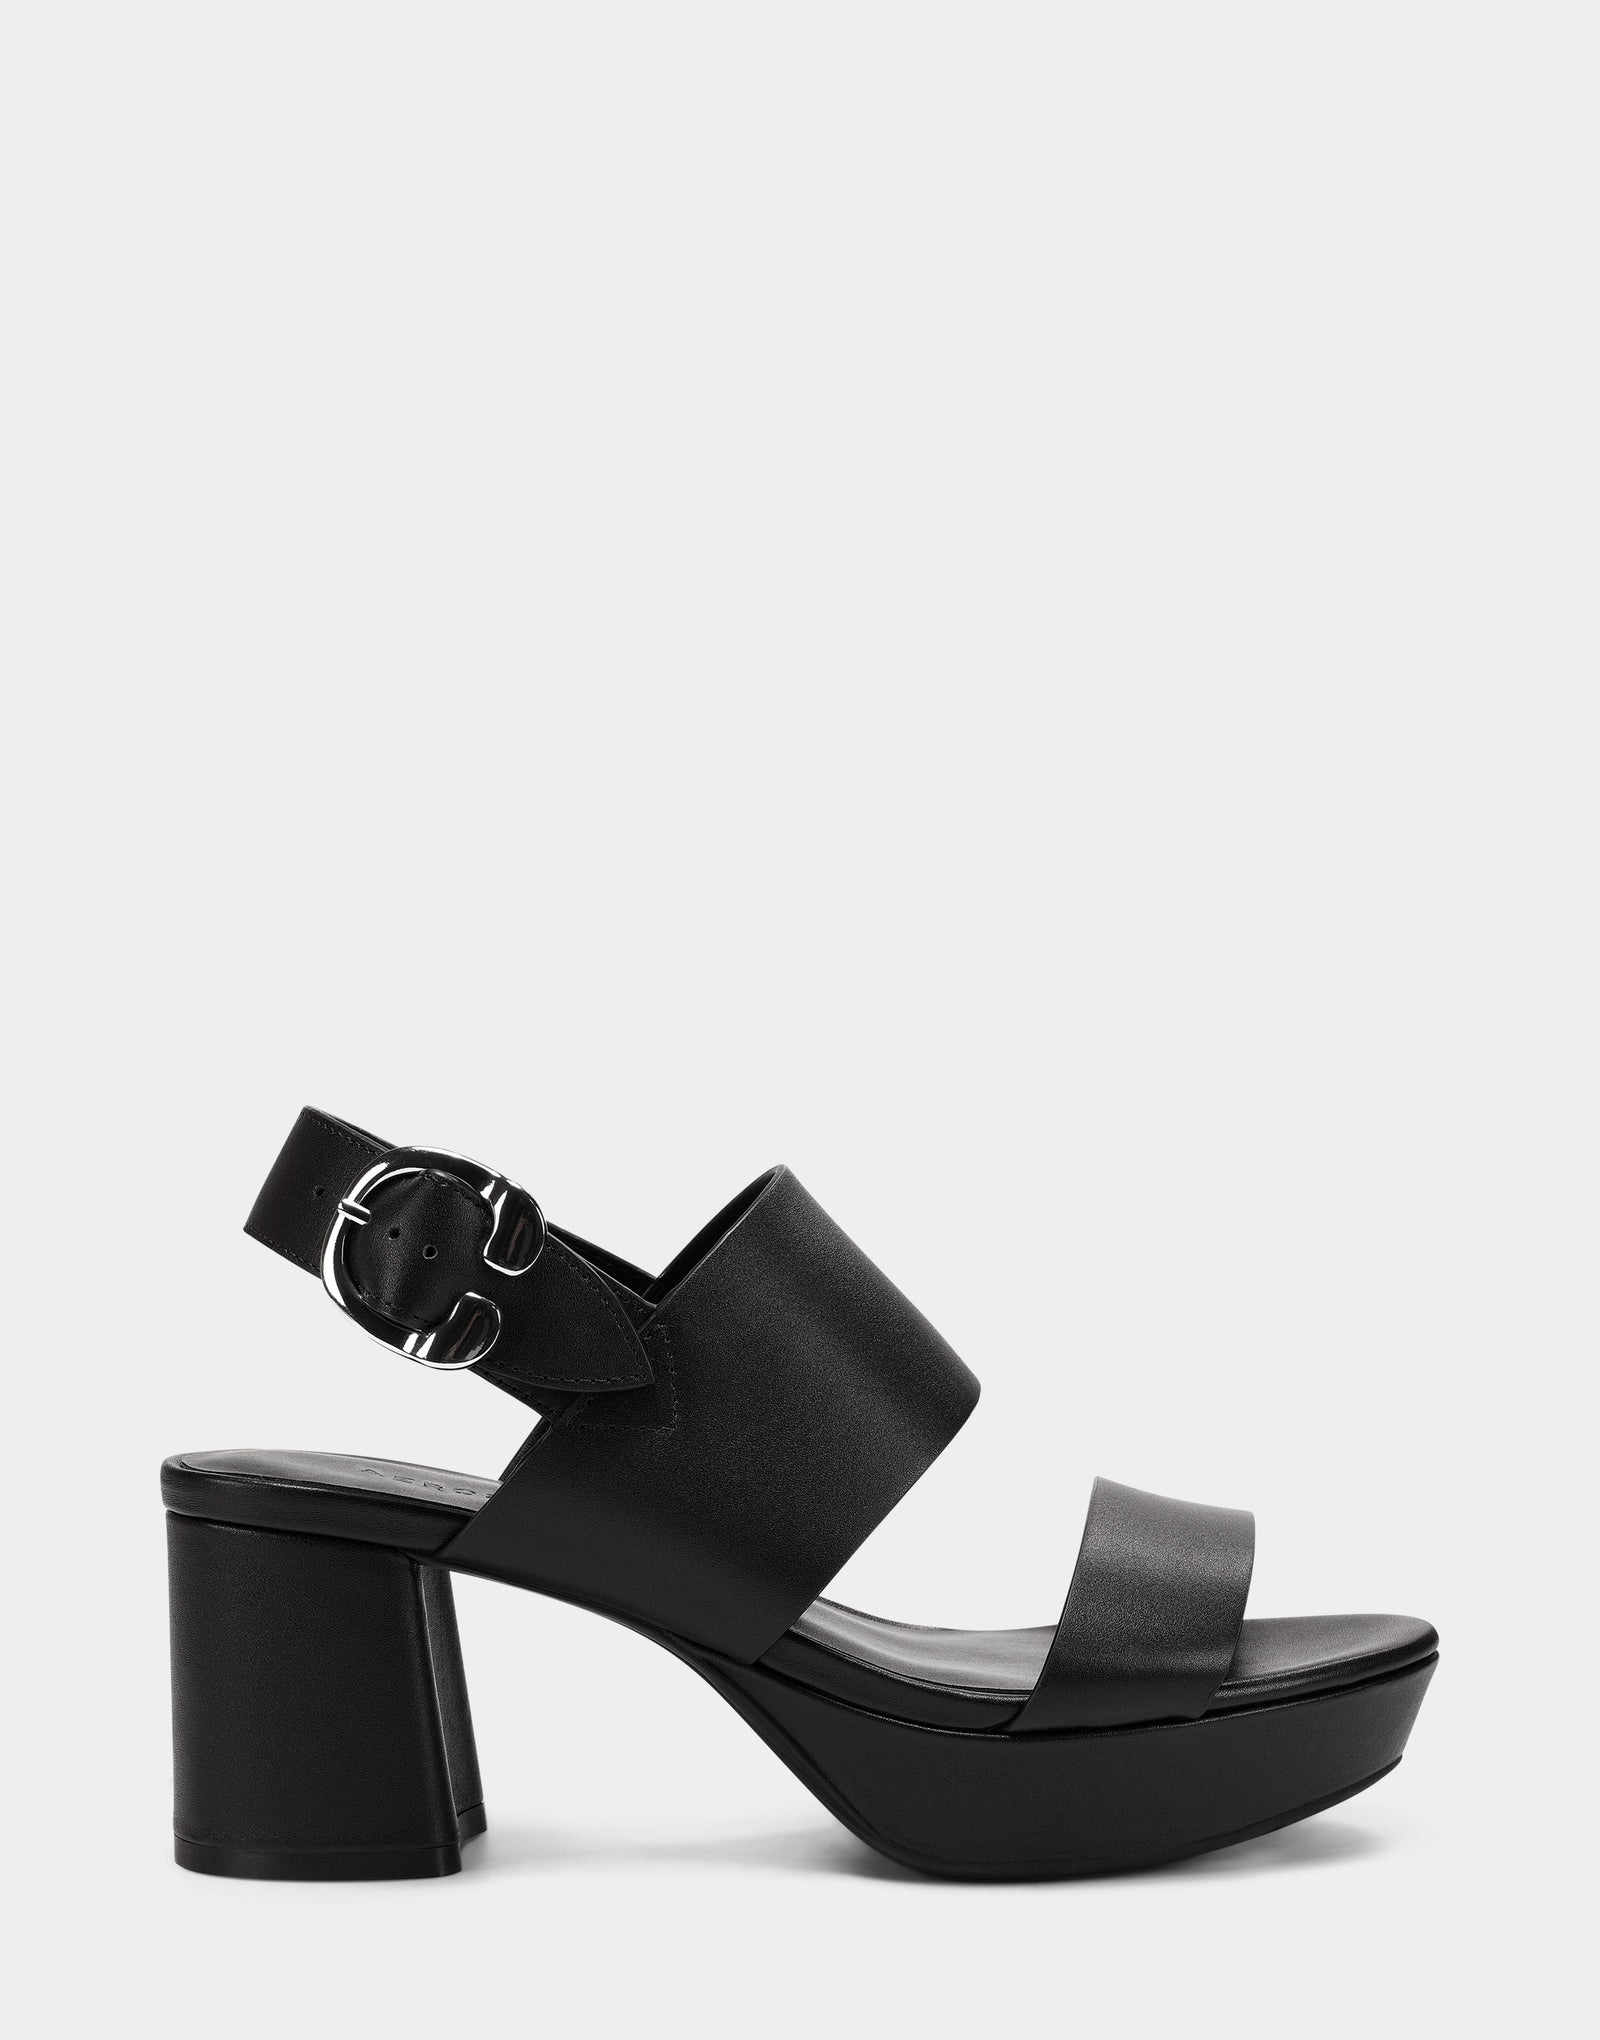 Women's Platform Sandal in Black Leather